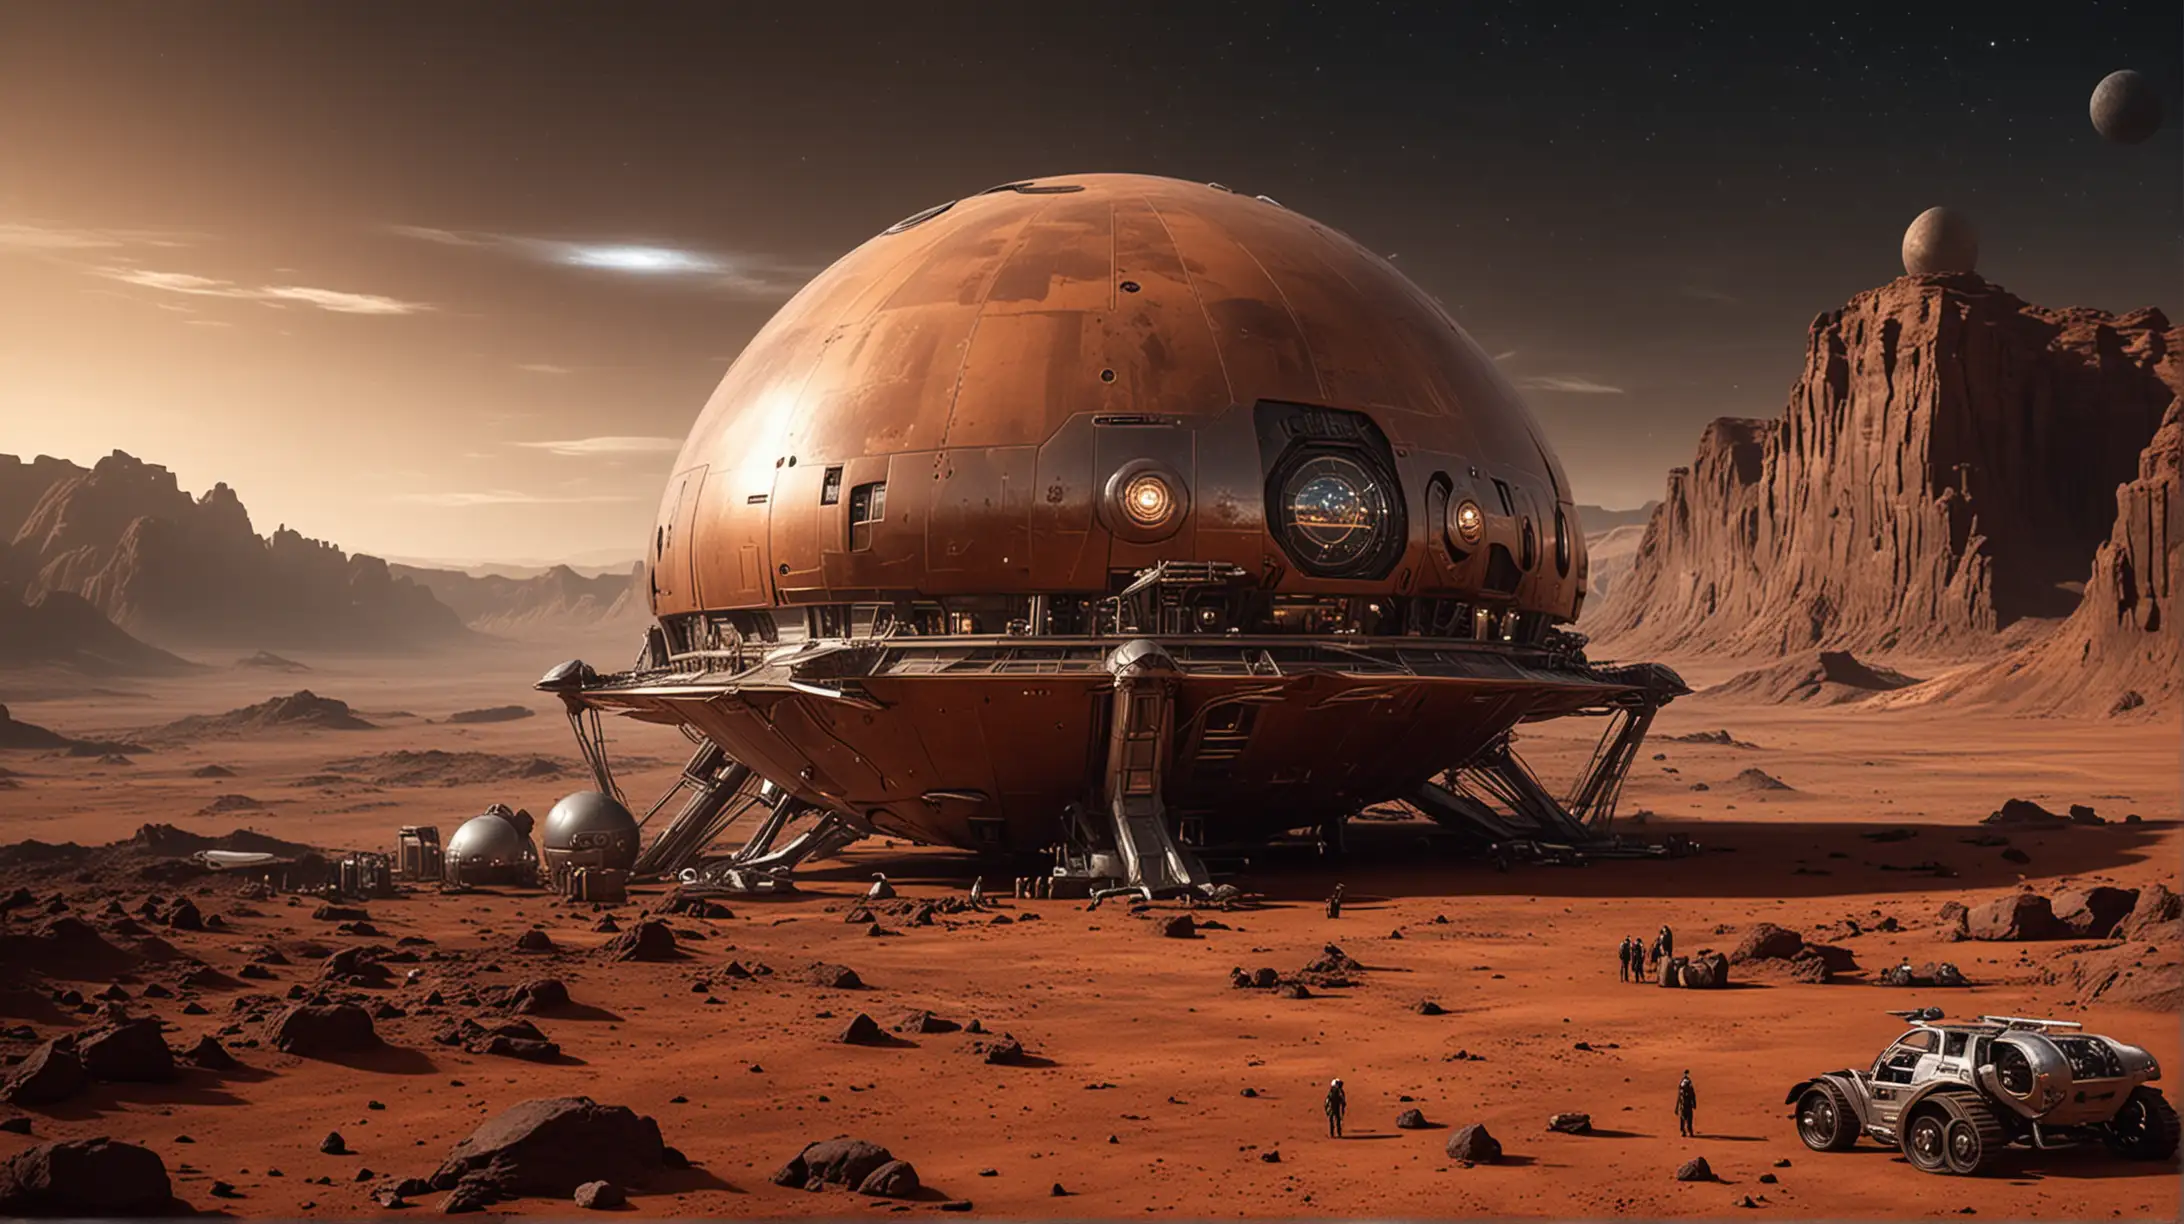 Dark Alien Spherical Ship Lands Near Human Steampunk Colony on Mars